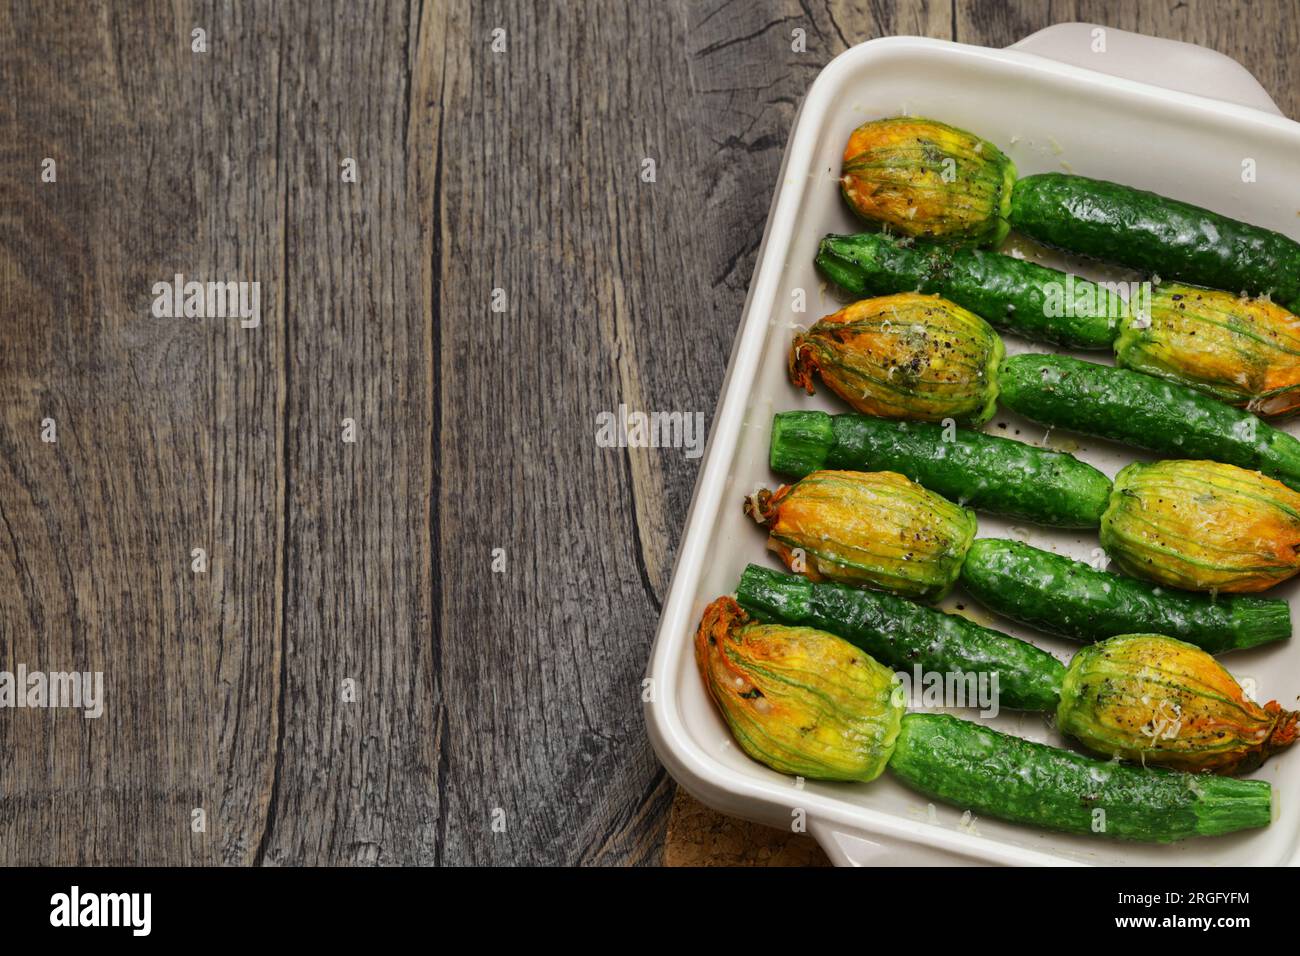 Oven baked stuffed zucchini flowers, Italian cuisine Stock Photo